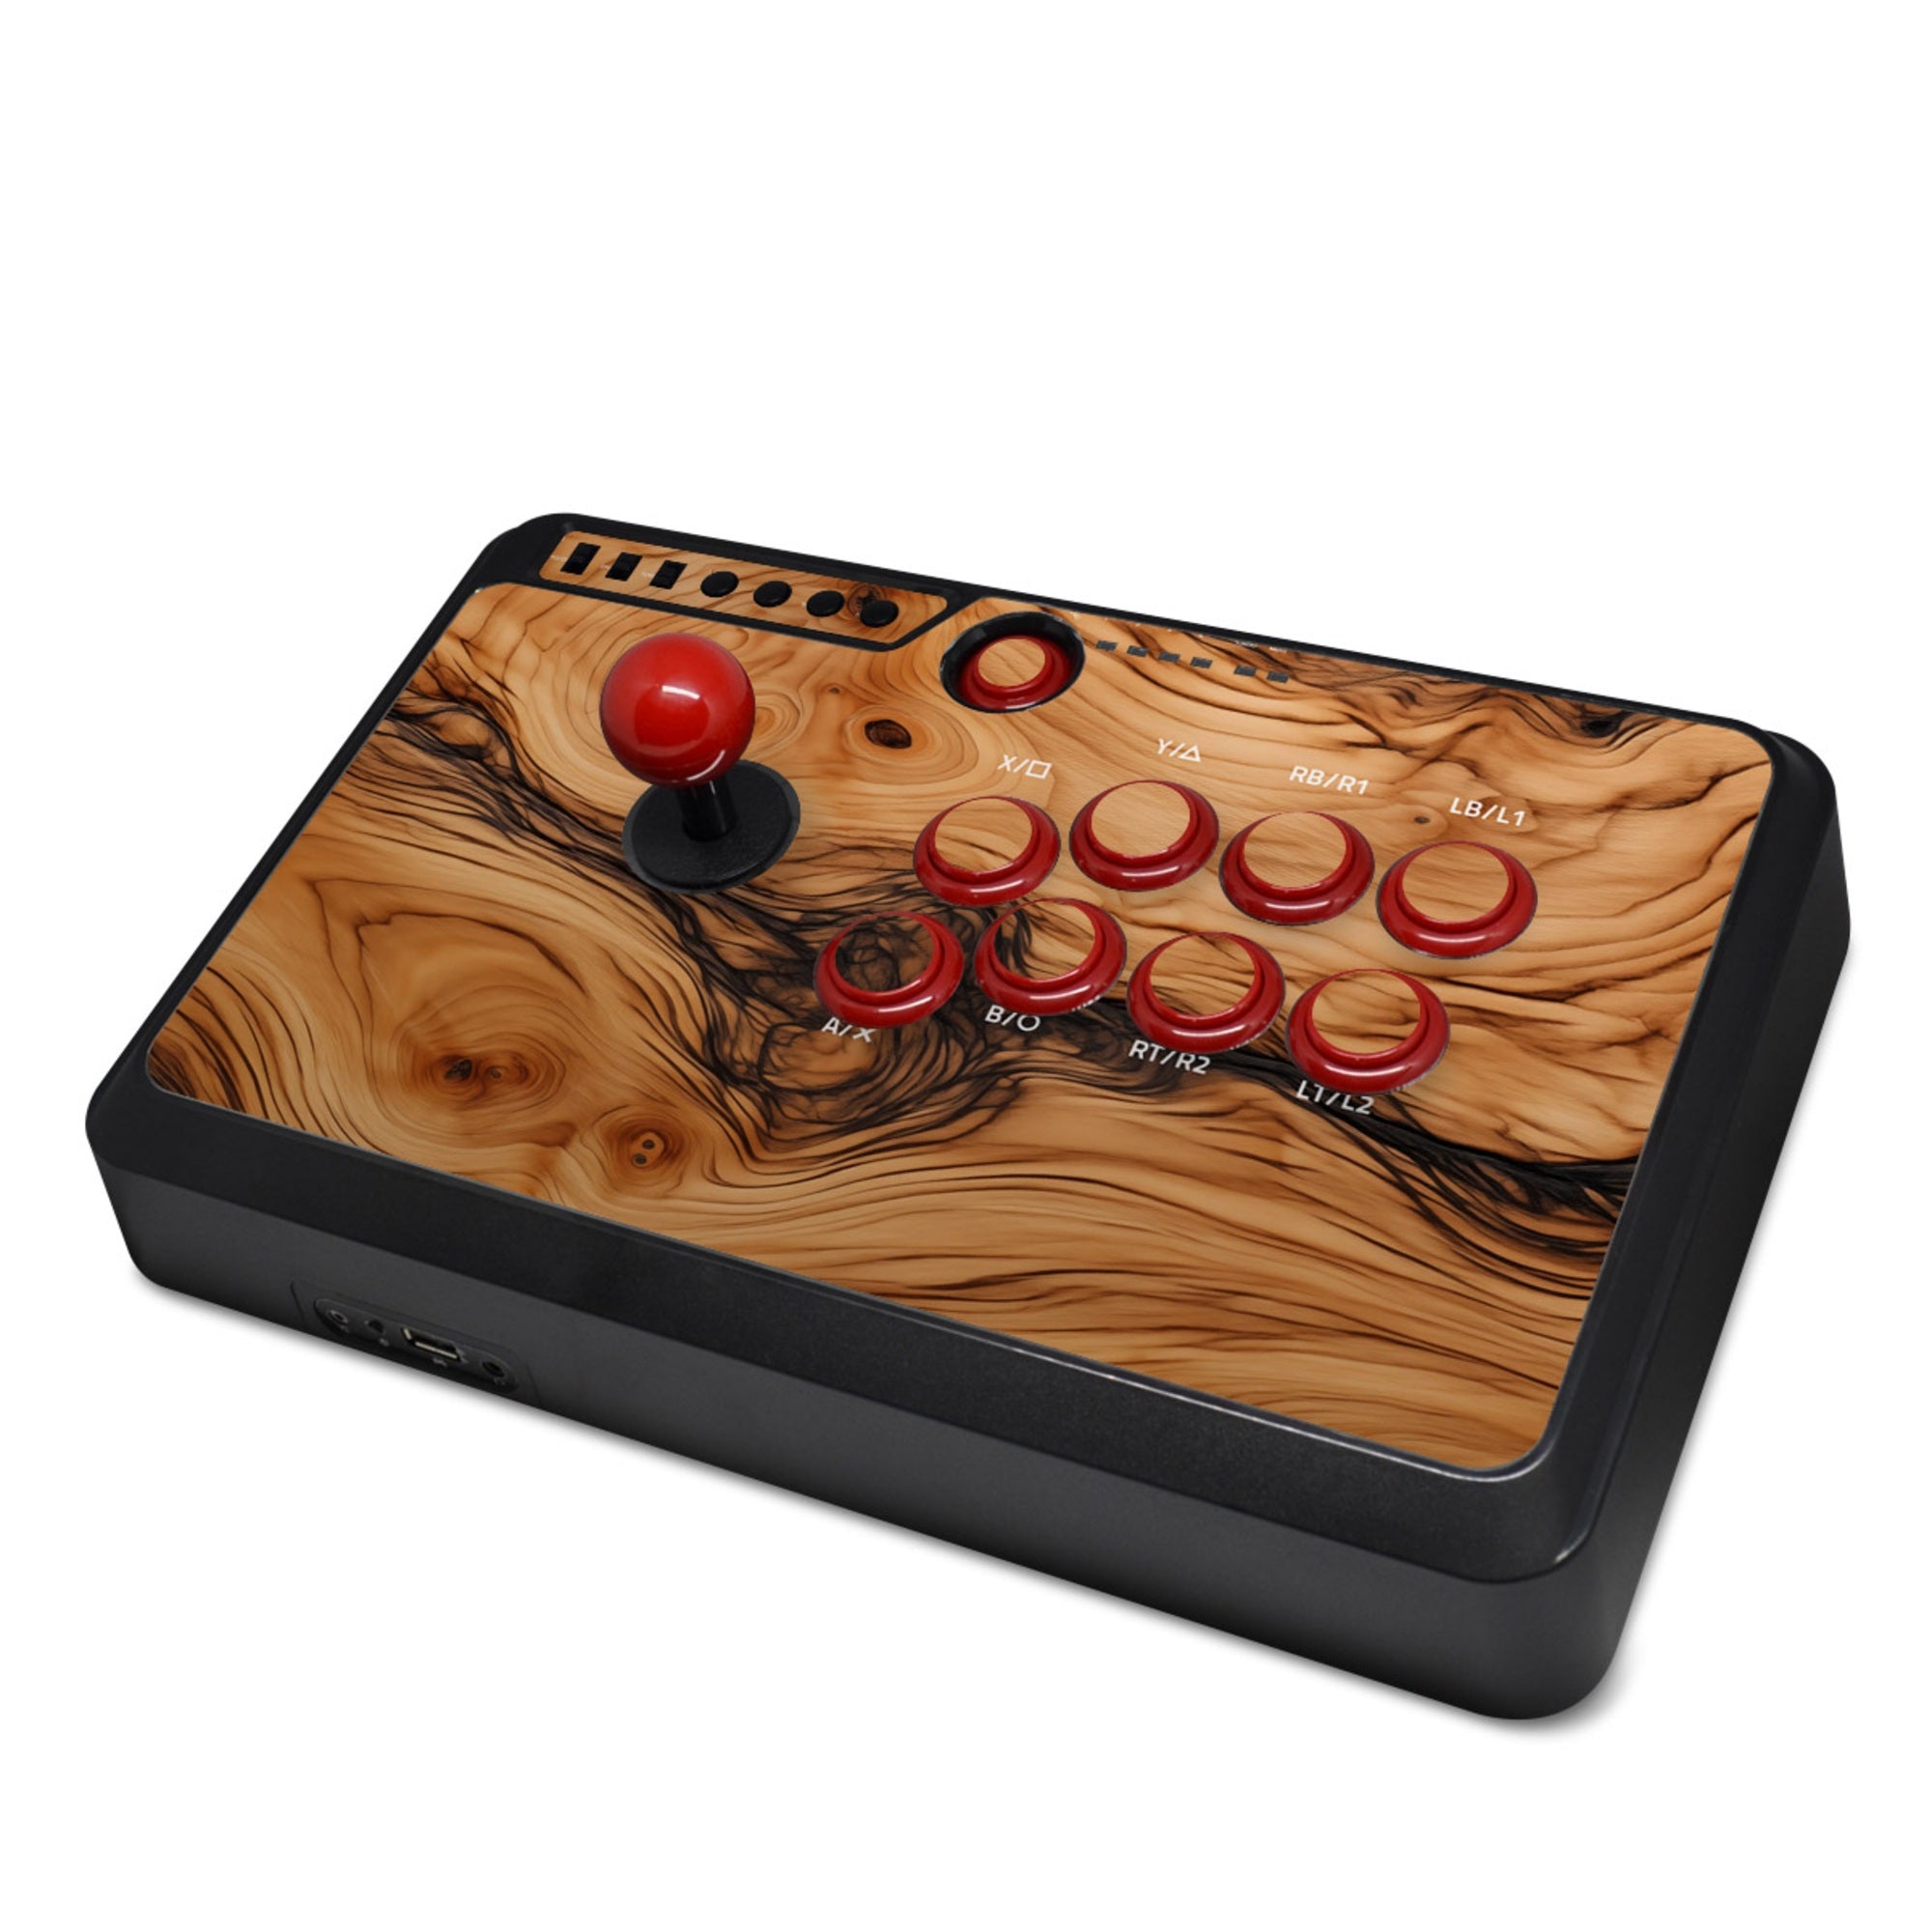 Olive Wood - Mayflash F500 Arcade Fightstick Skin